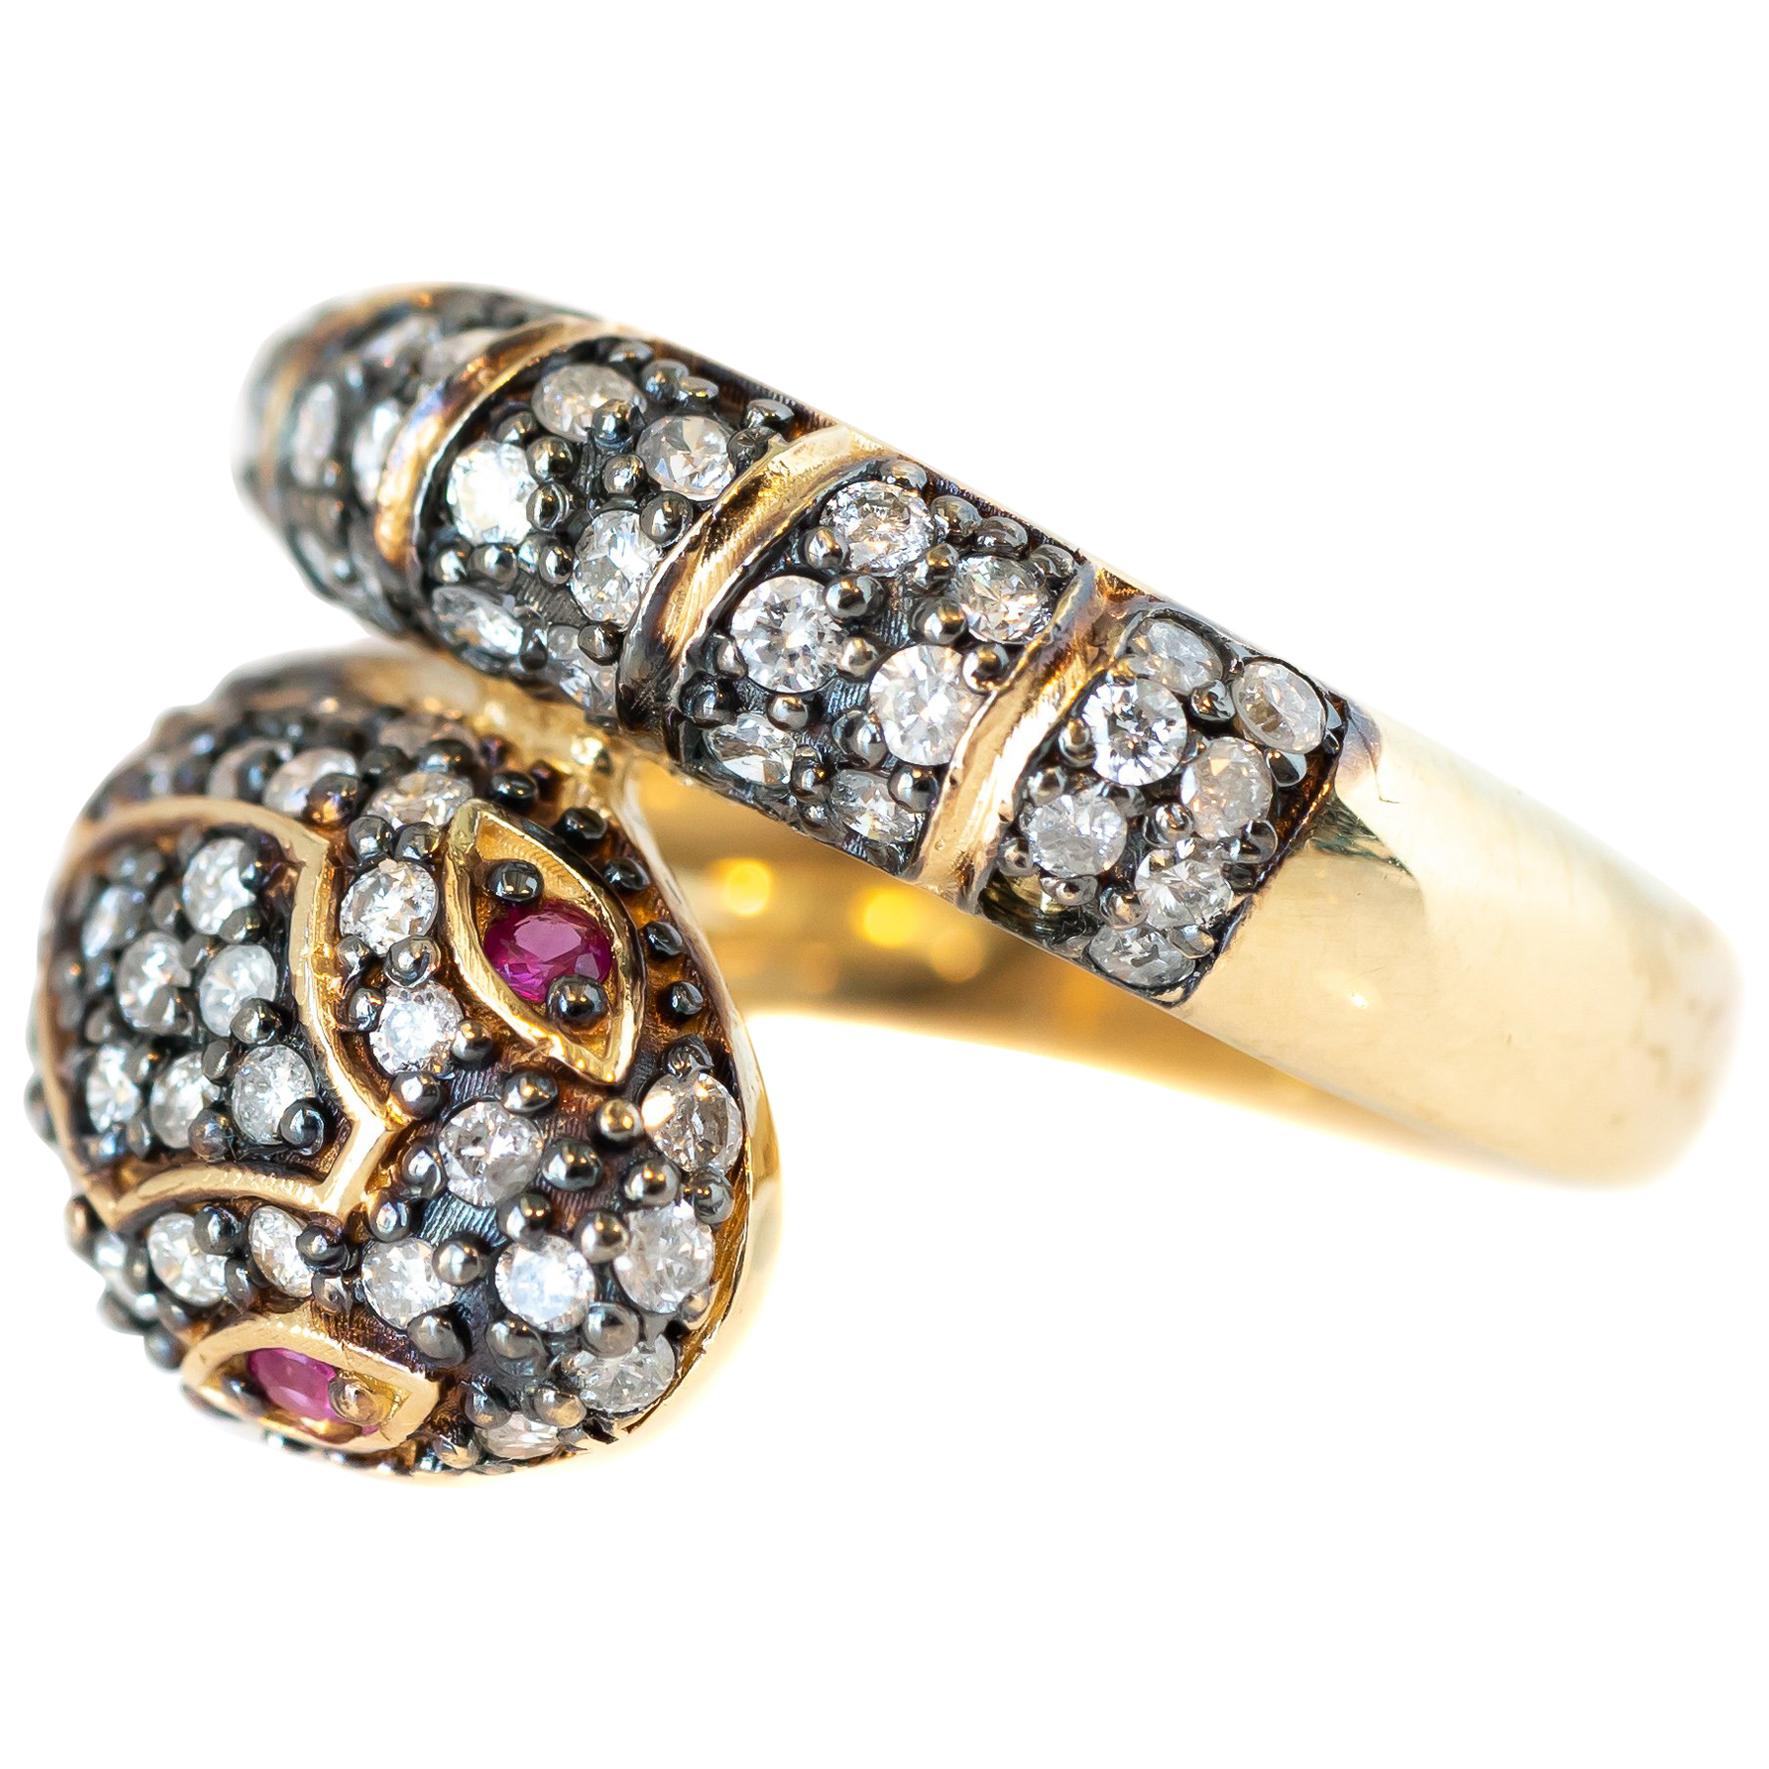 1.18 Carat Total Diamond and Pink Sapphires Serpent Ring in 14 Karat Yellow Gold